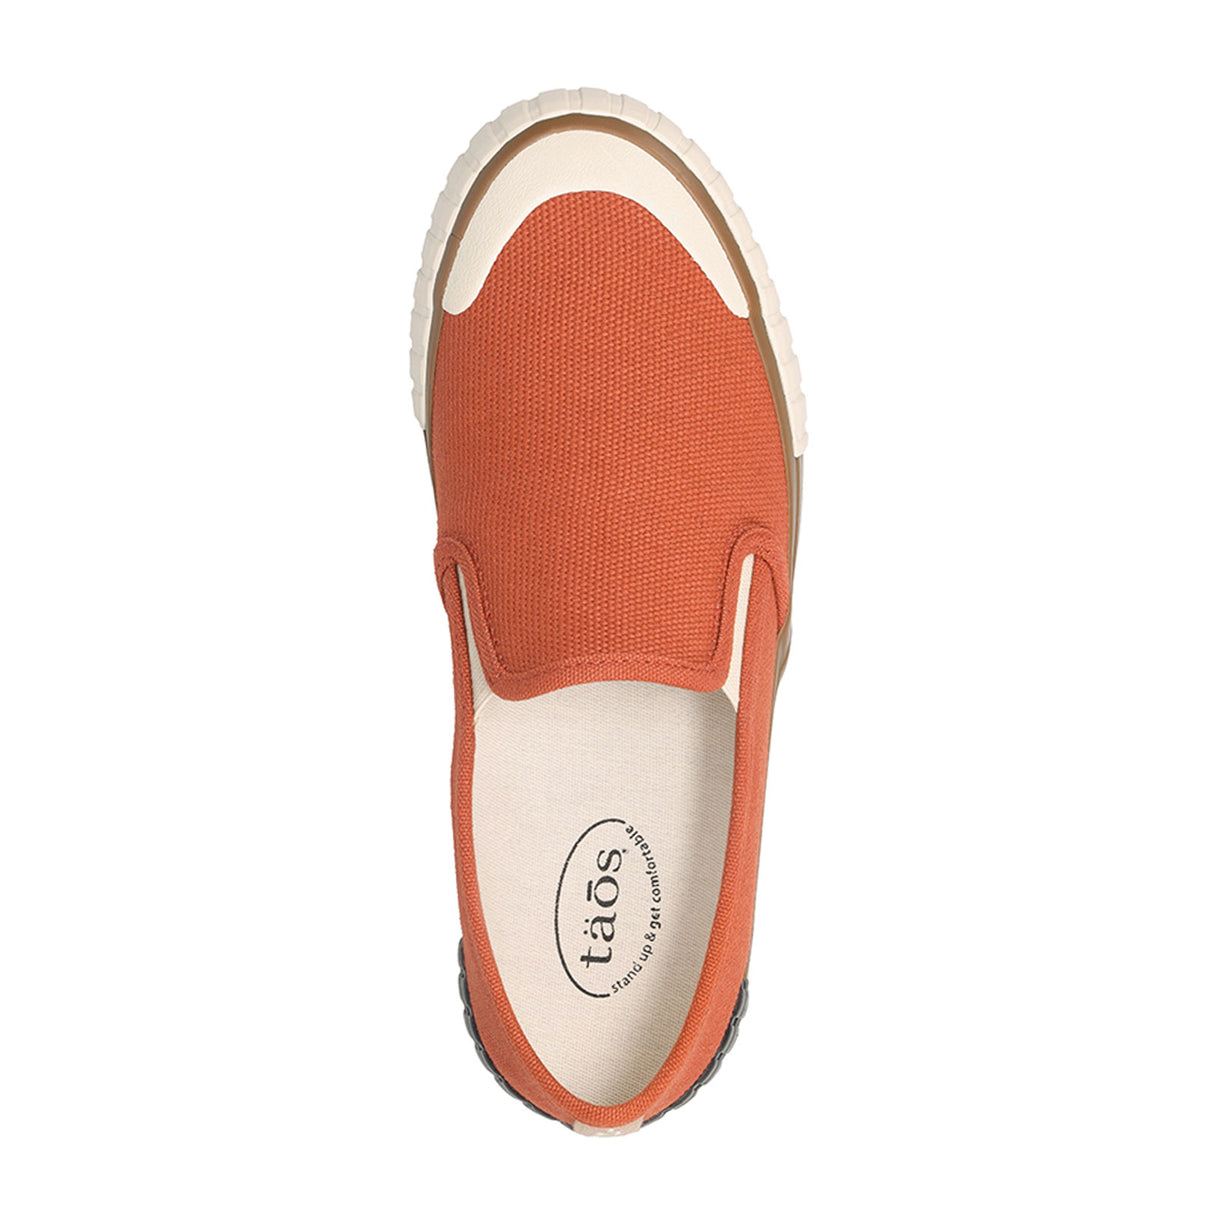 Taos Double Vision Slip On Sneaker (Women) - Terracotta Dress-Casual - Slip-Ons - The Heel Shoe Fitters